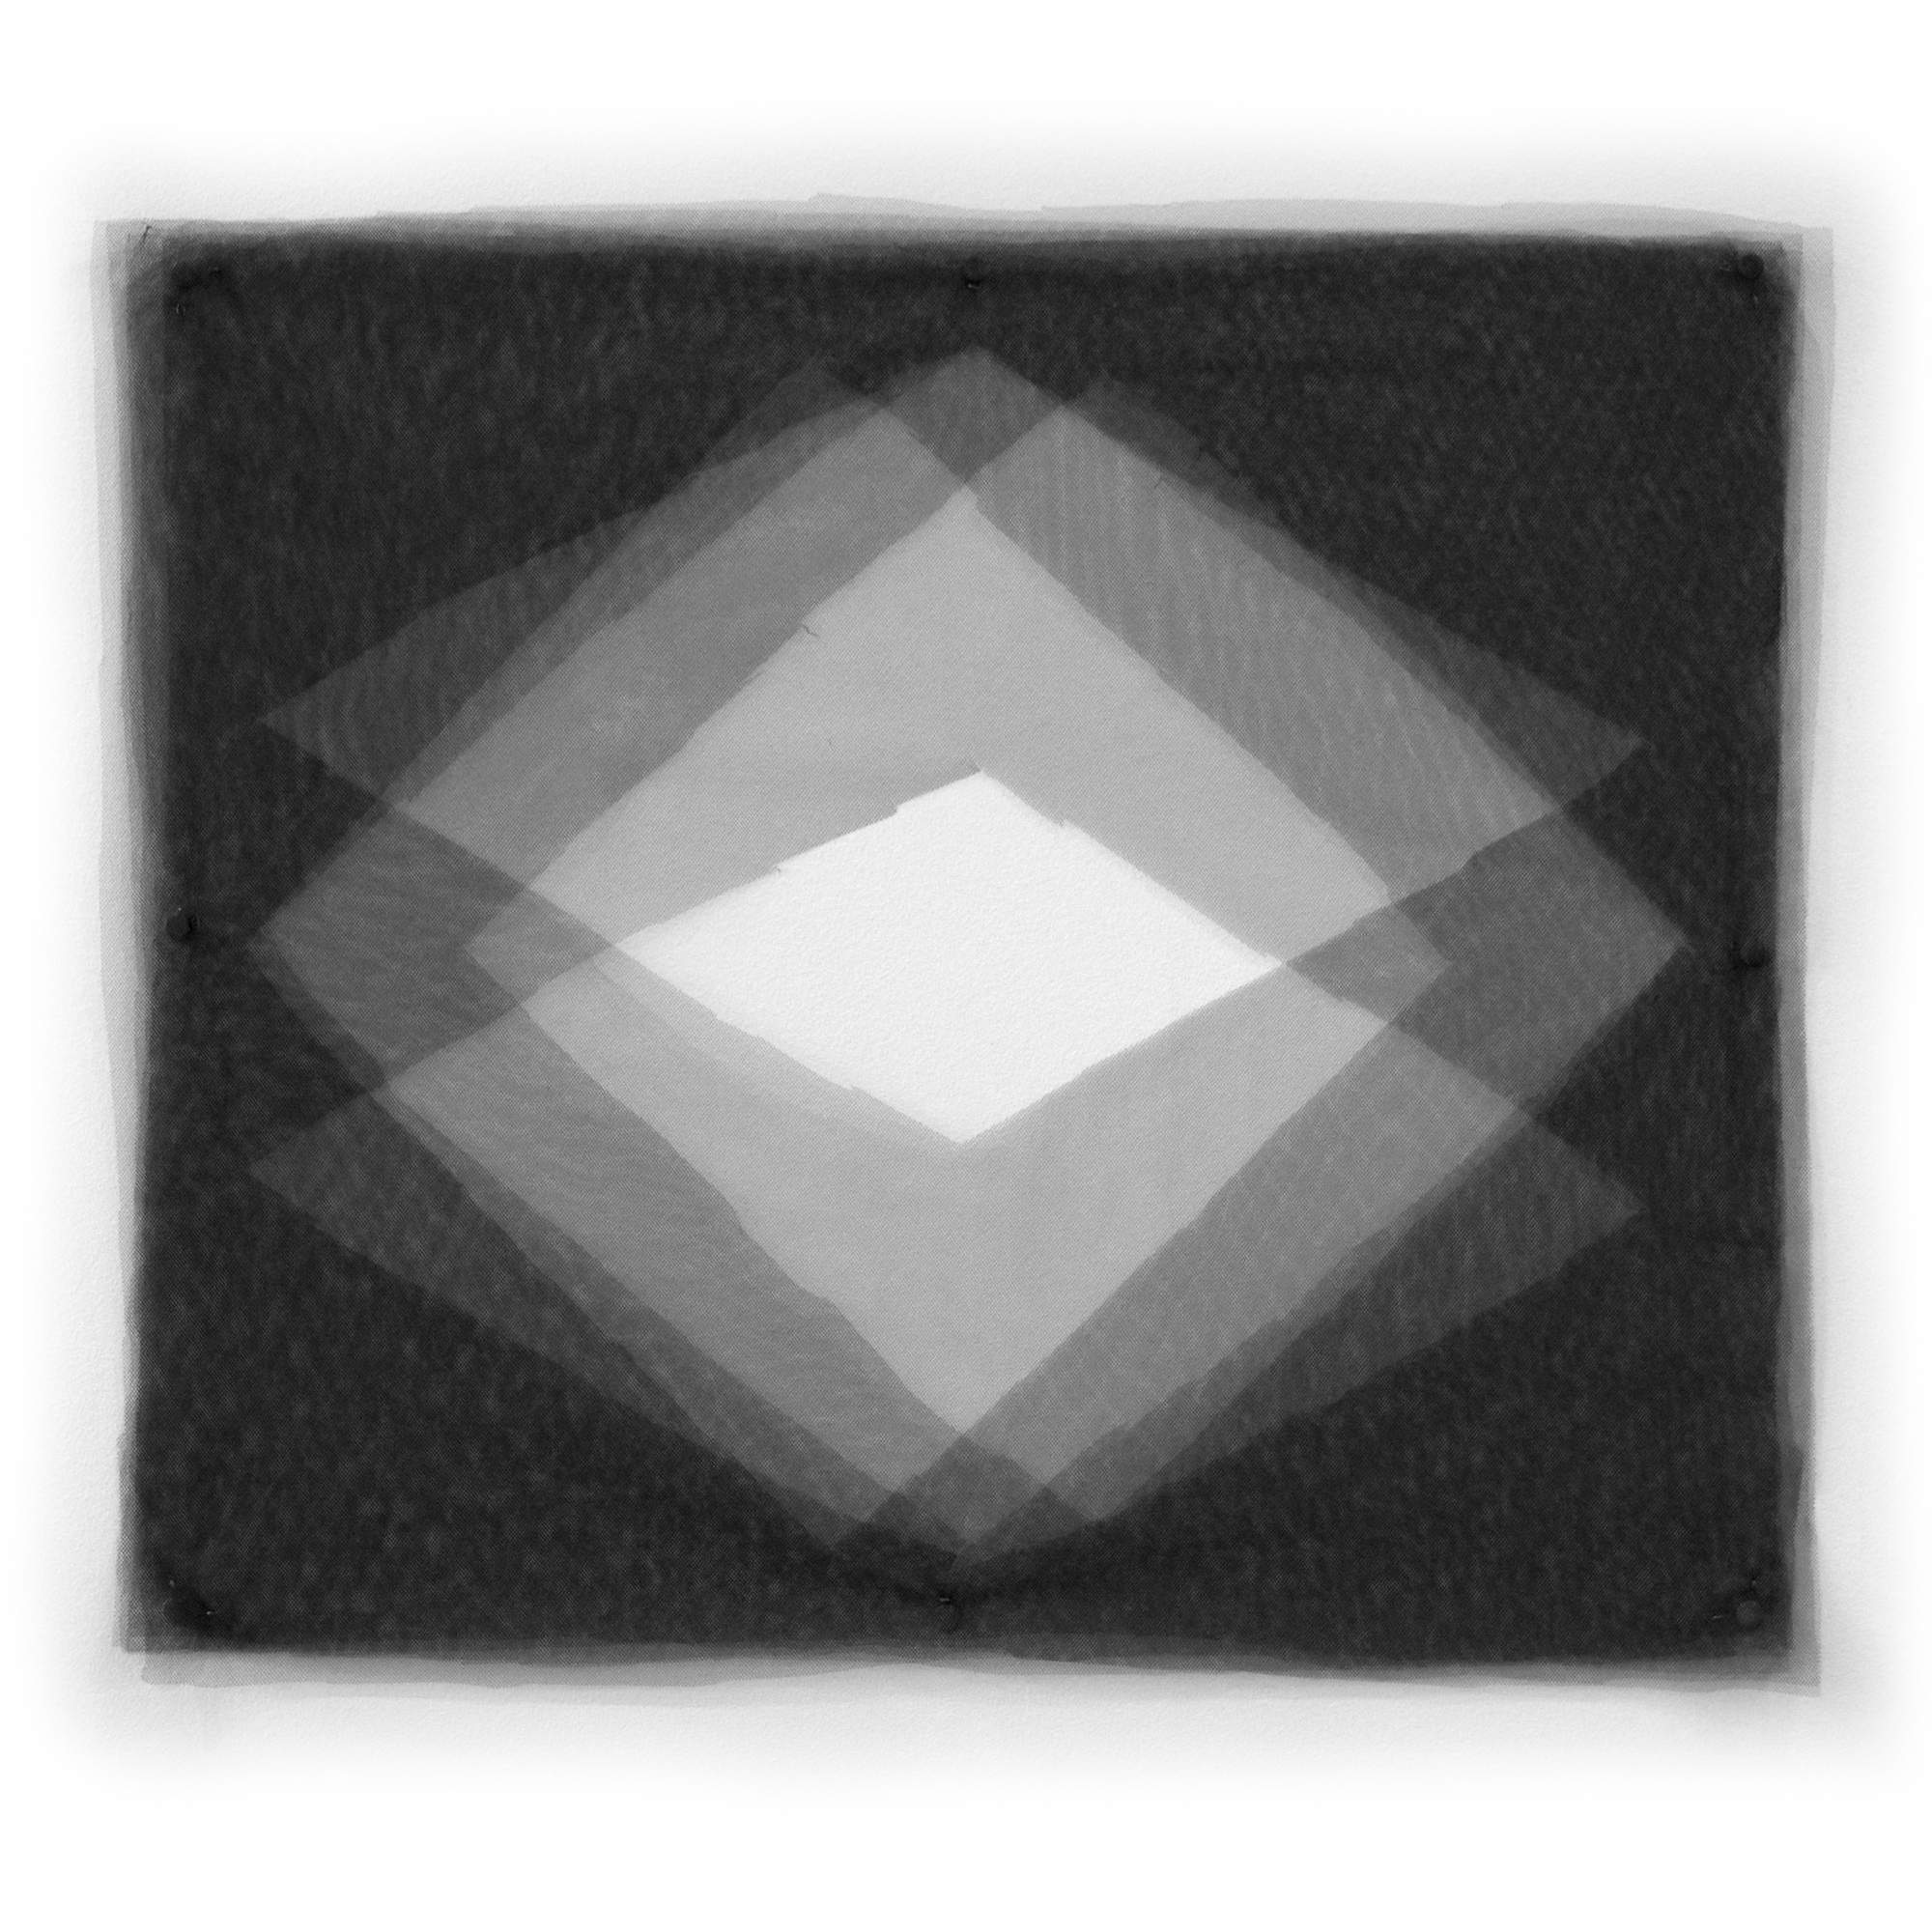 533-squares-rhombi.jpg